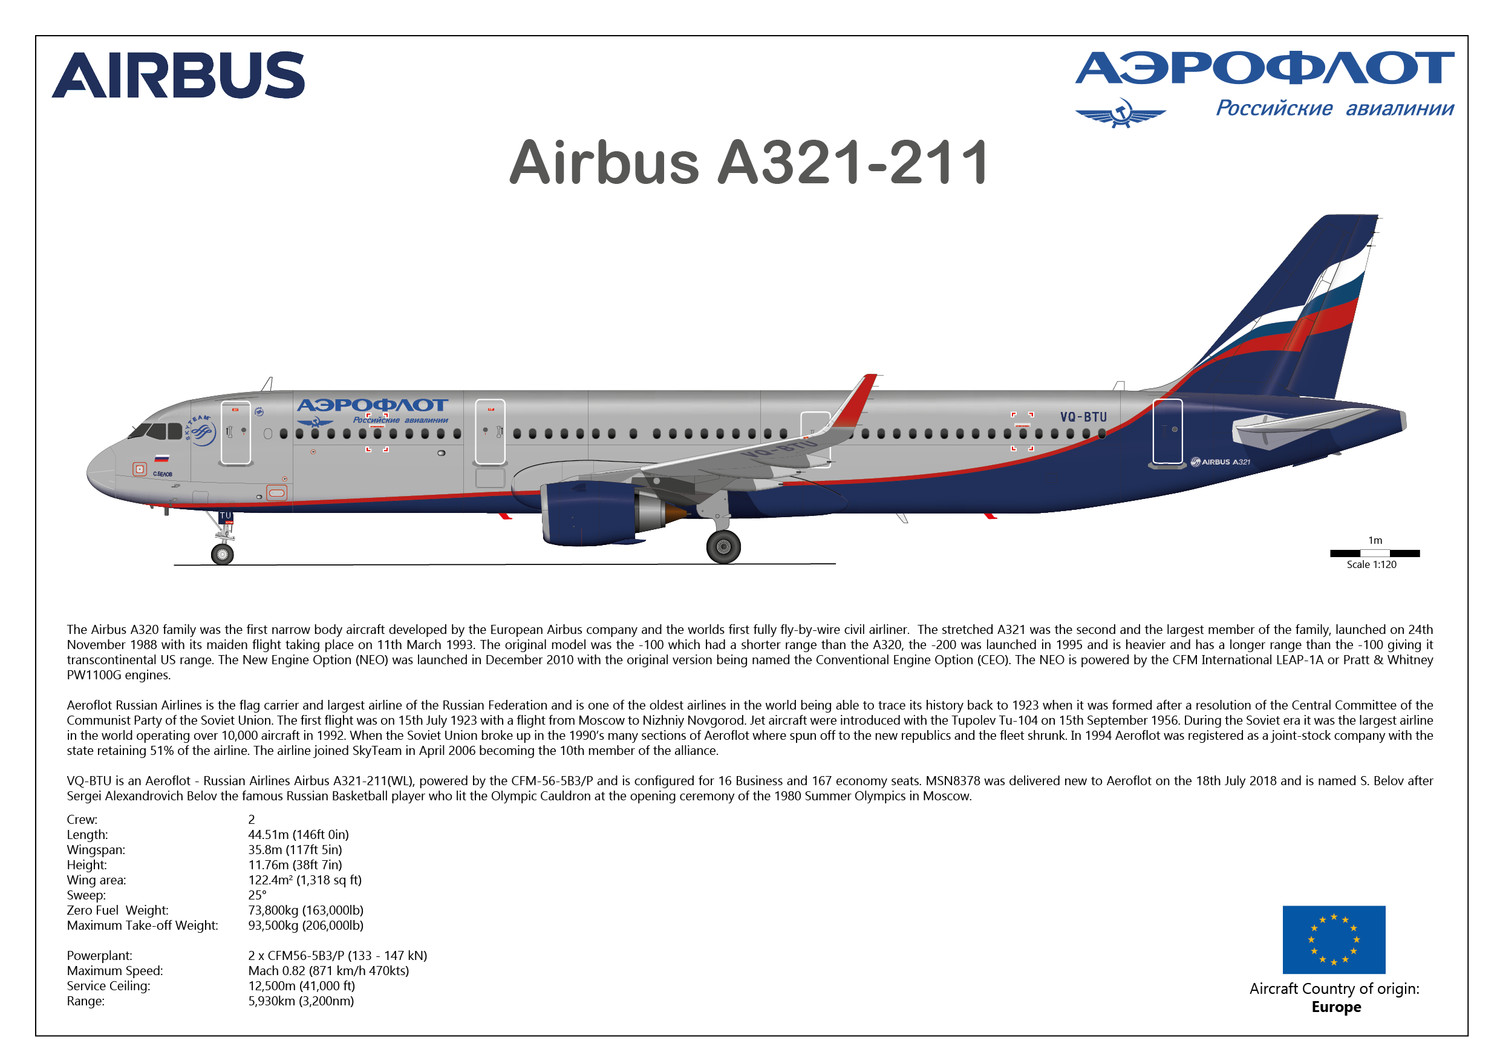 Airbus A321 of Aeroflot VQ-BTU - Digital Download